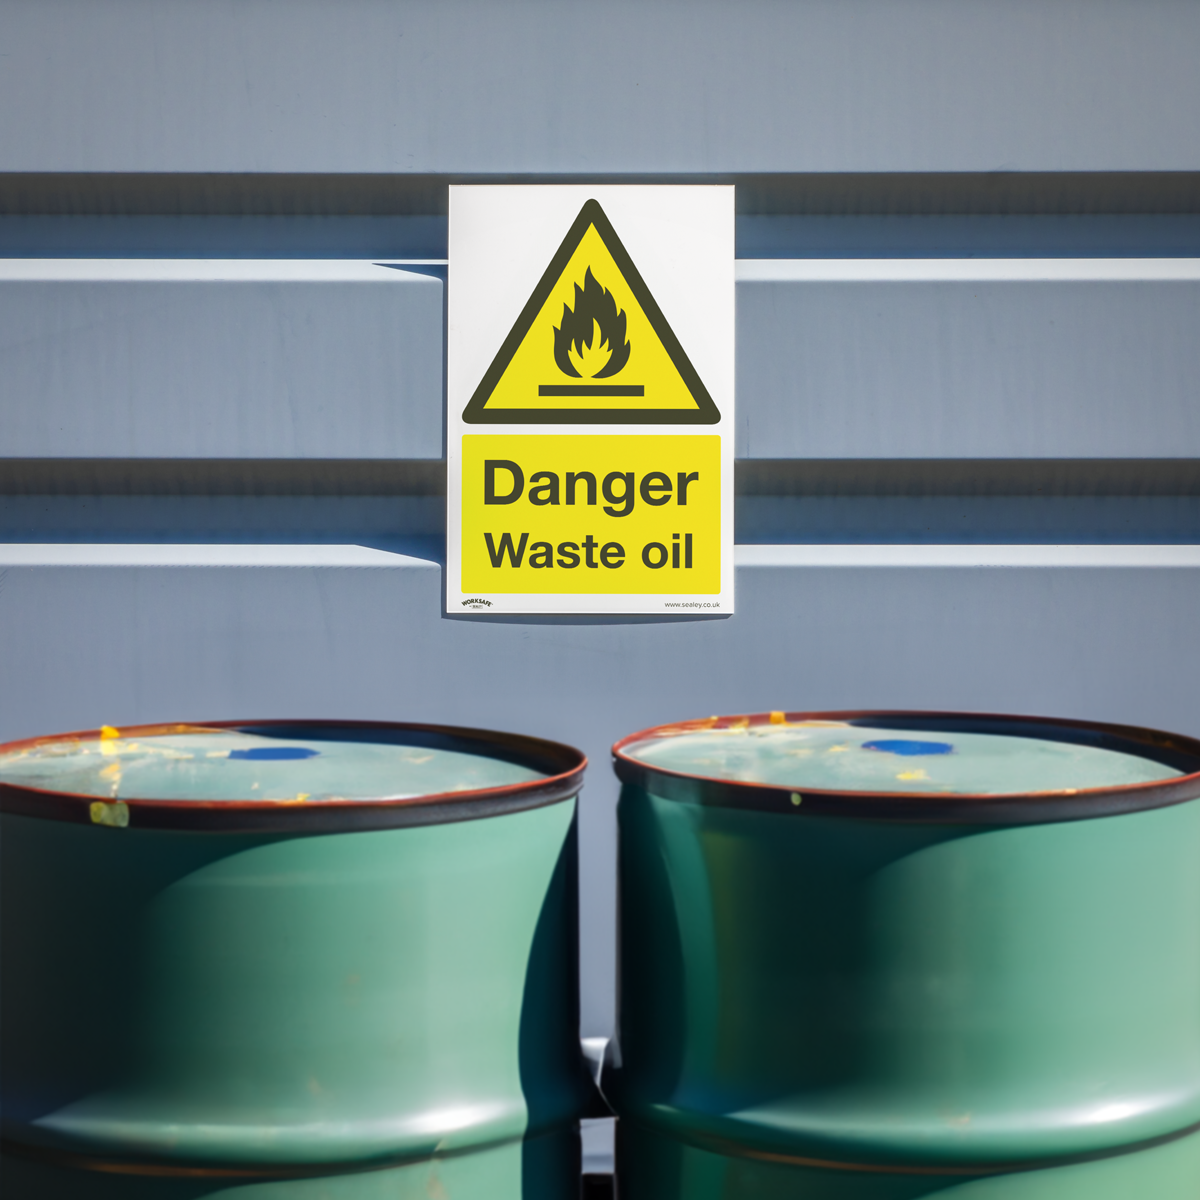 Warning Safety Sign - Danger Waste Oil - Self-Adhesive Vinyl